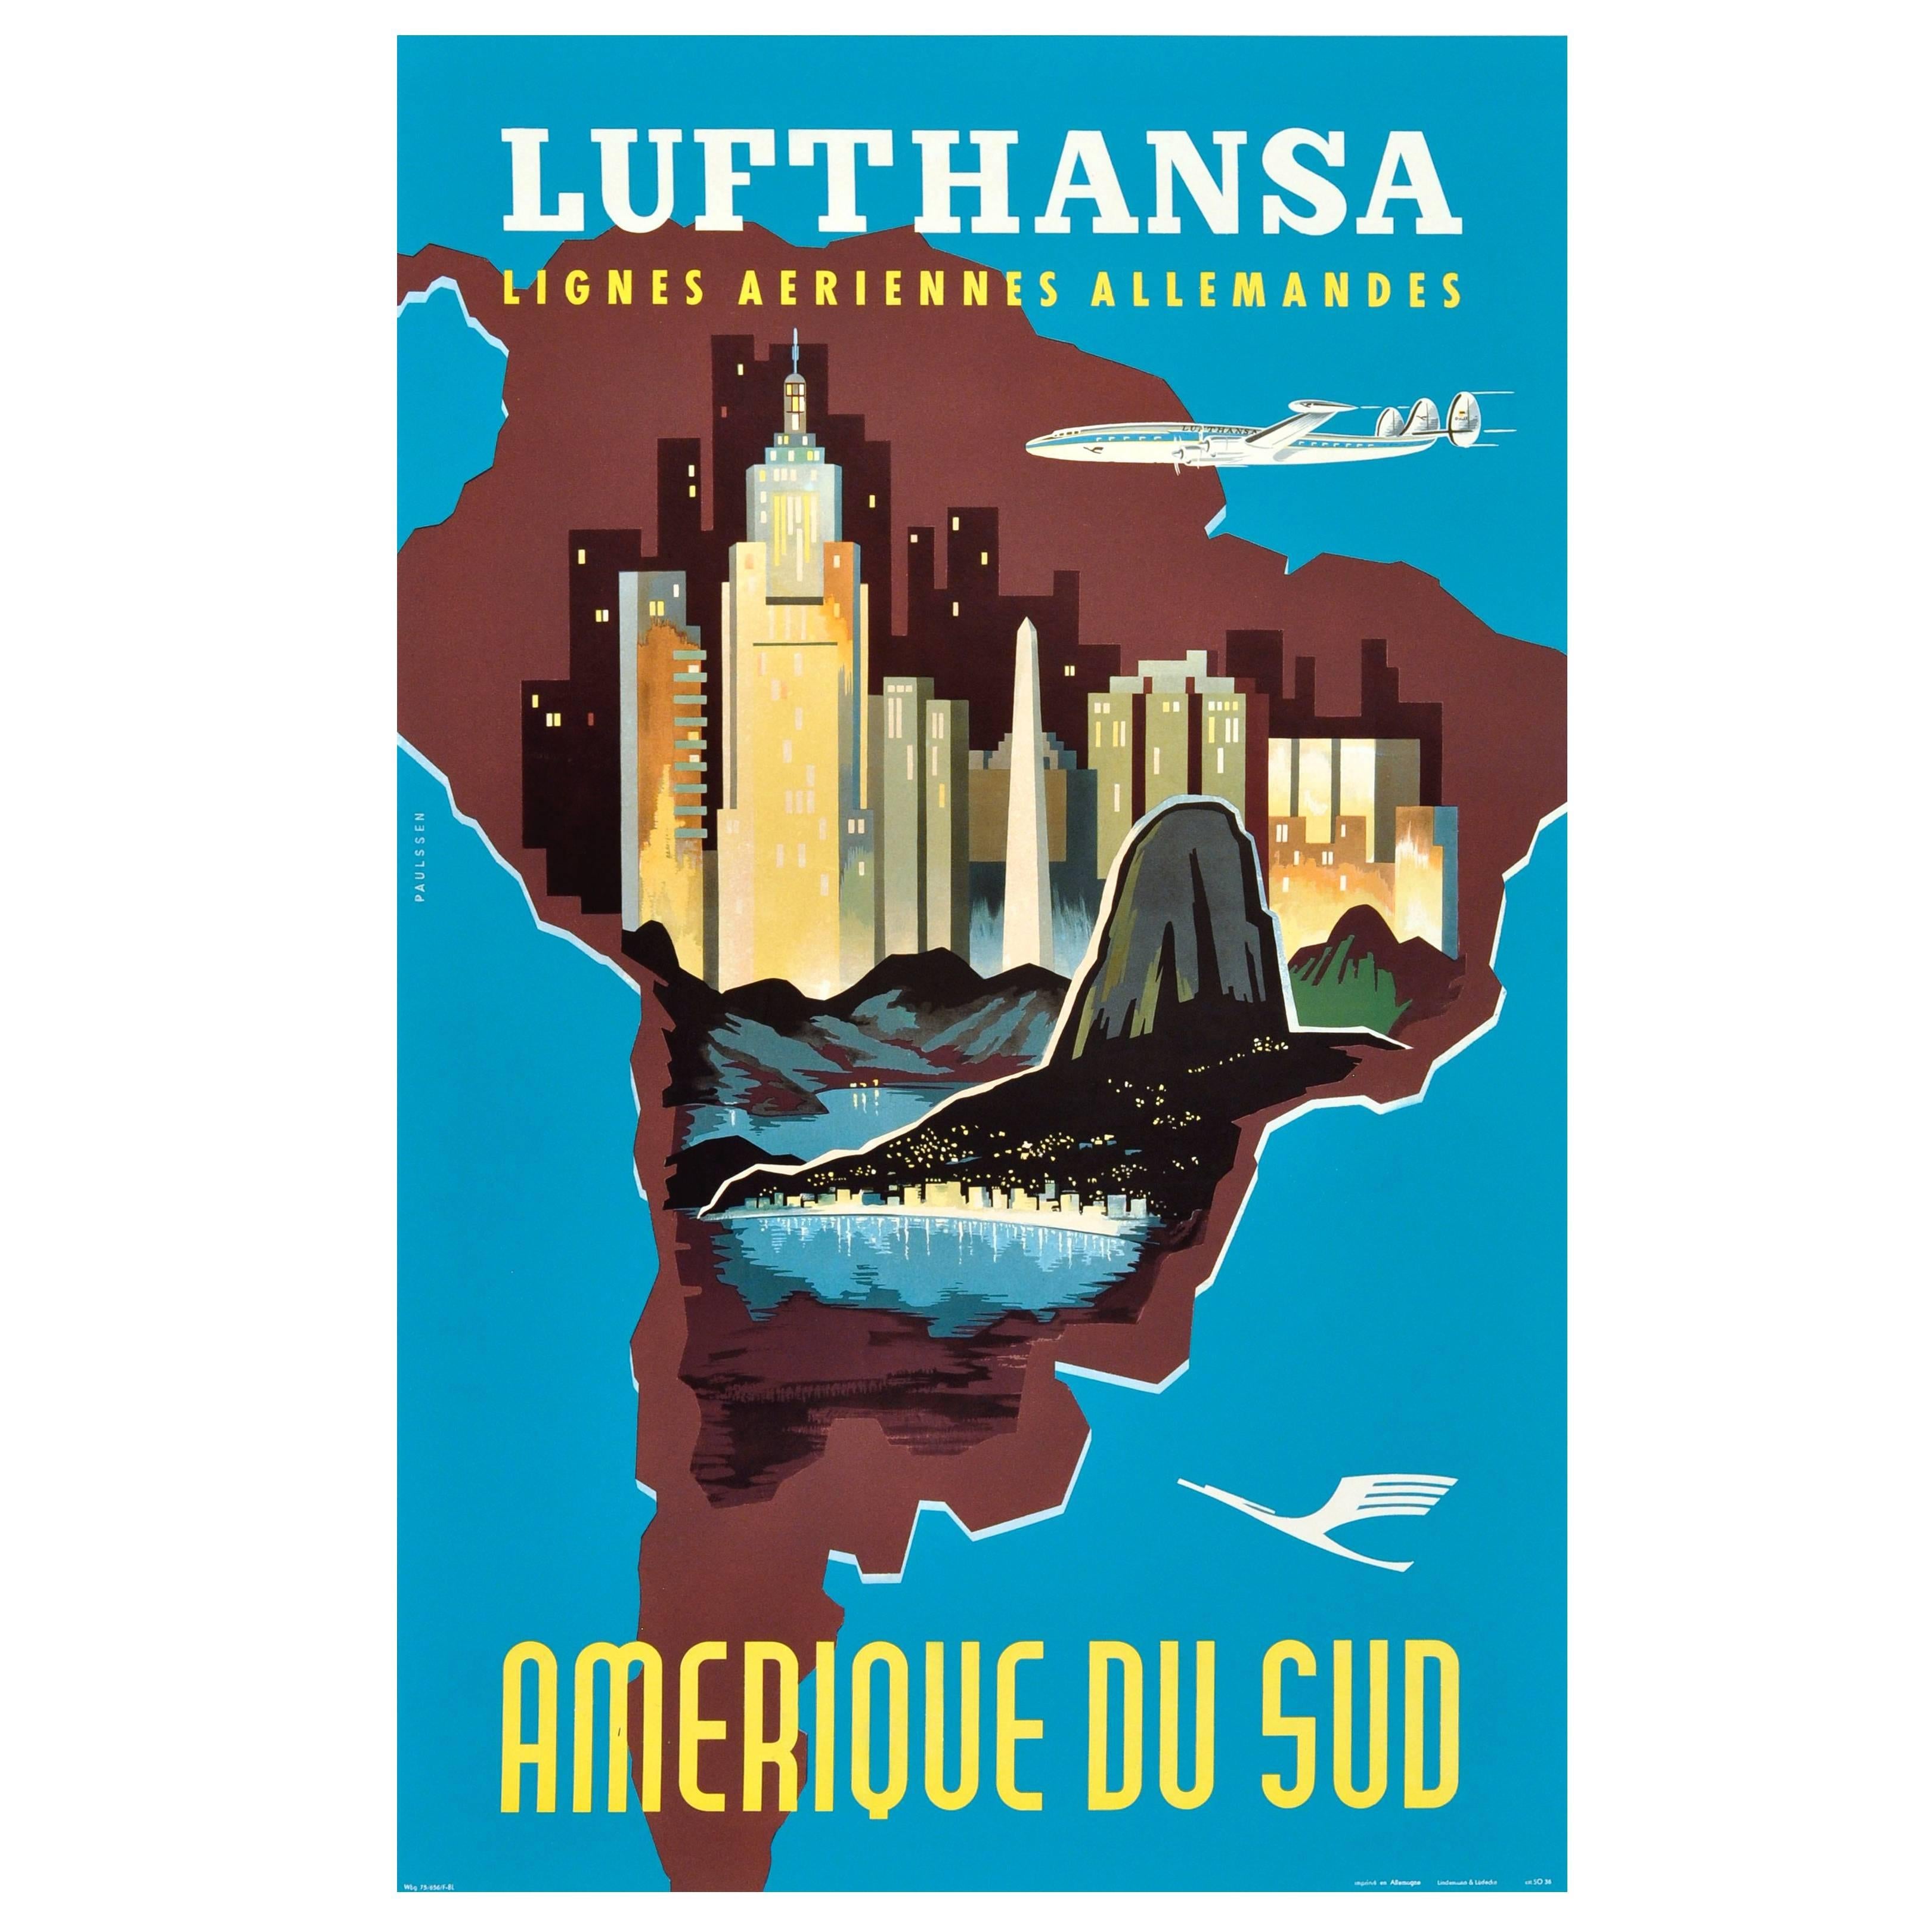 Original Vintage Travel Poster Advertising South America by Lufthansa